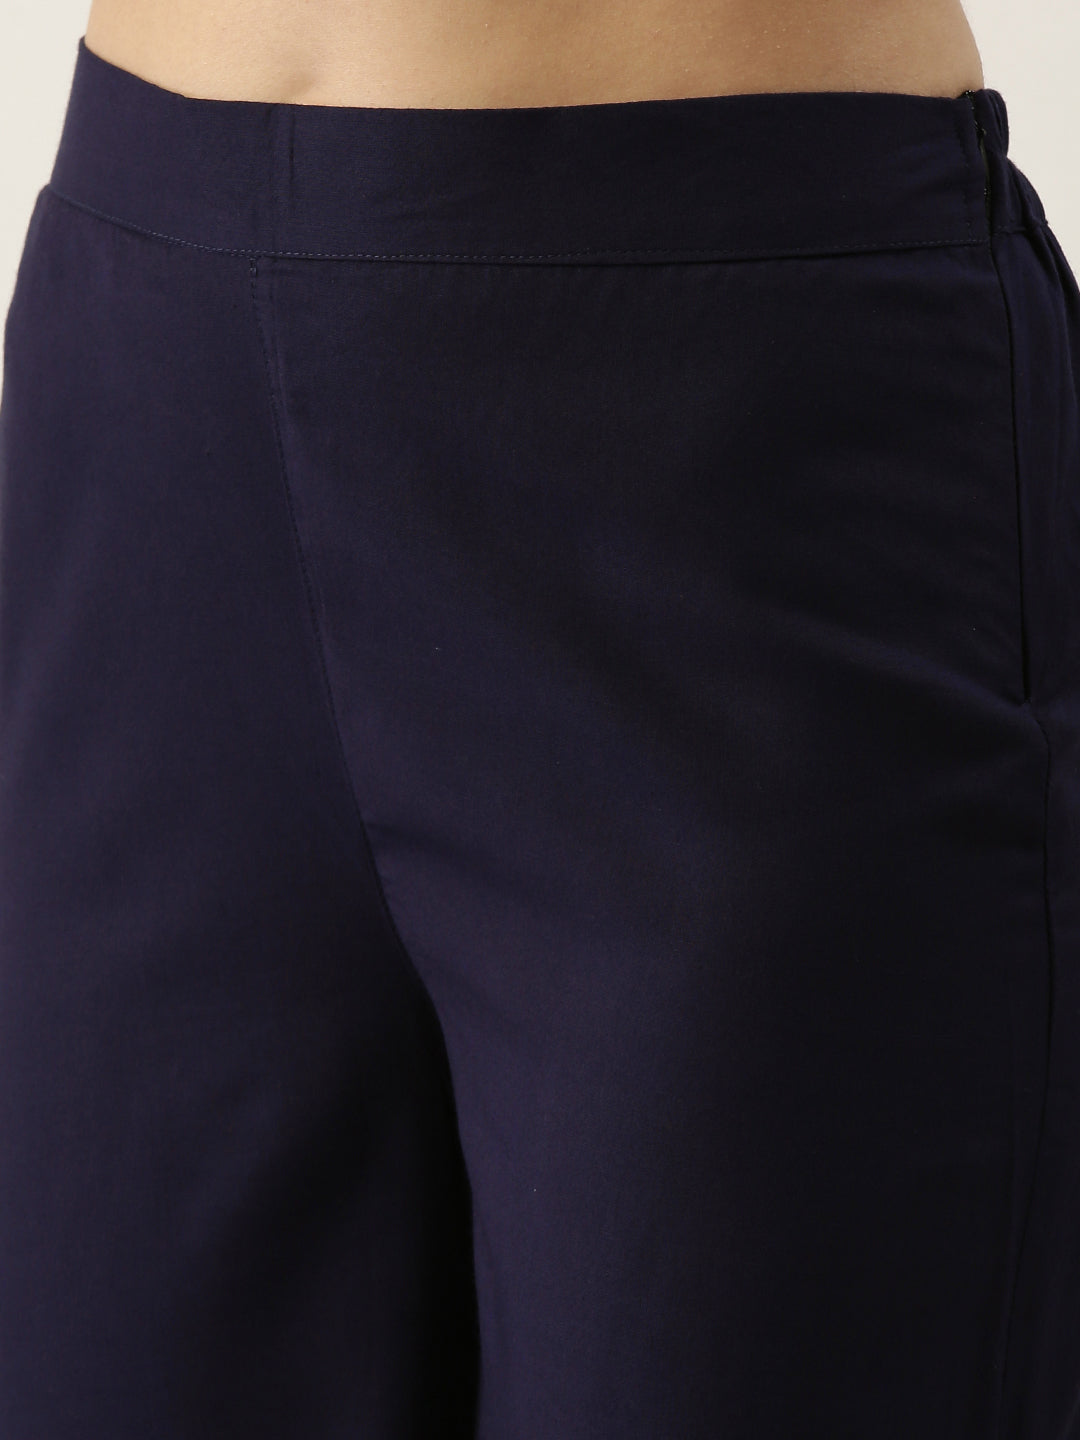 Navy Blue Crop Top Pants Set With Multi Organza Print Cape